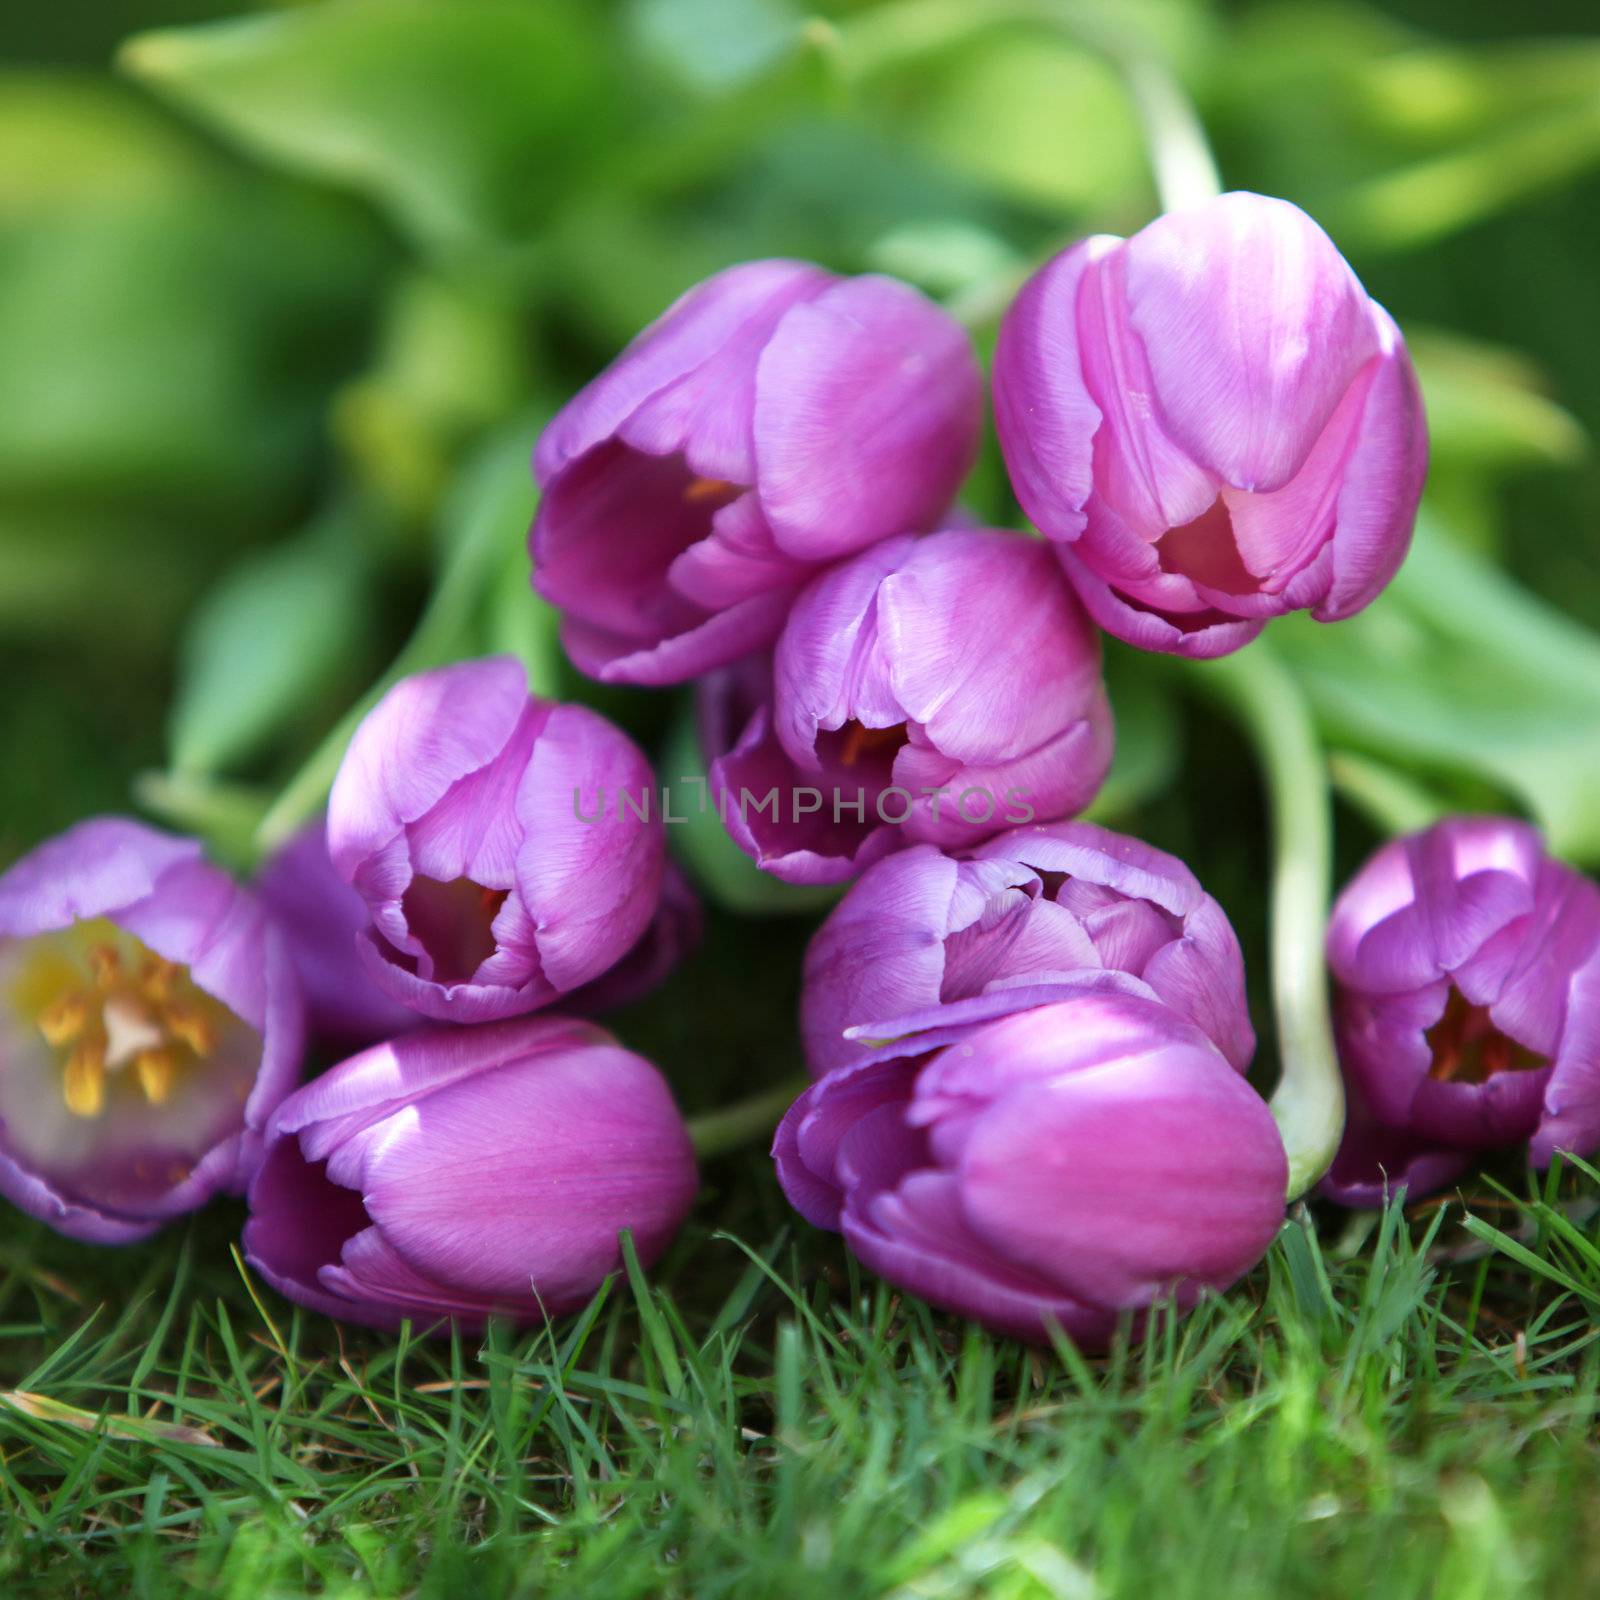 Bunch of purple tulips by Farina6000